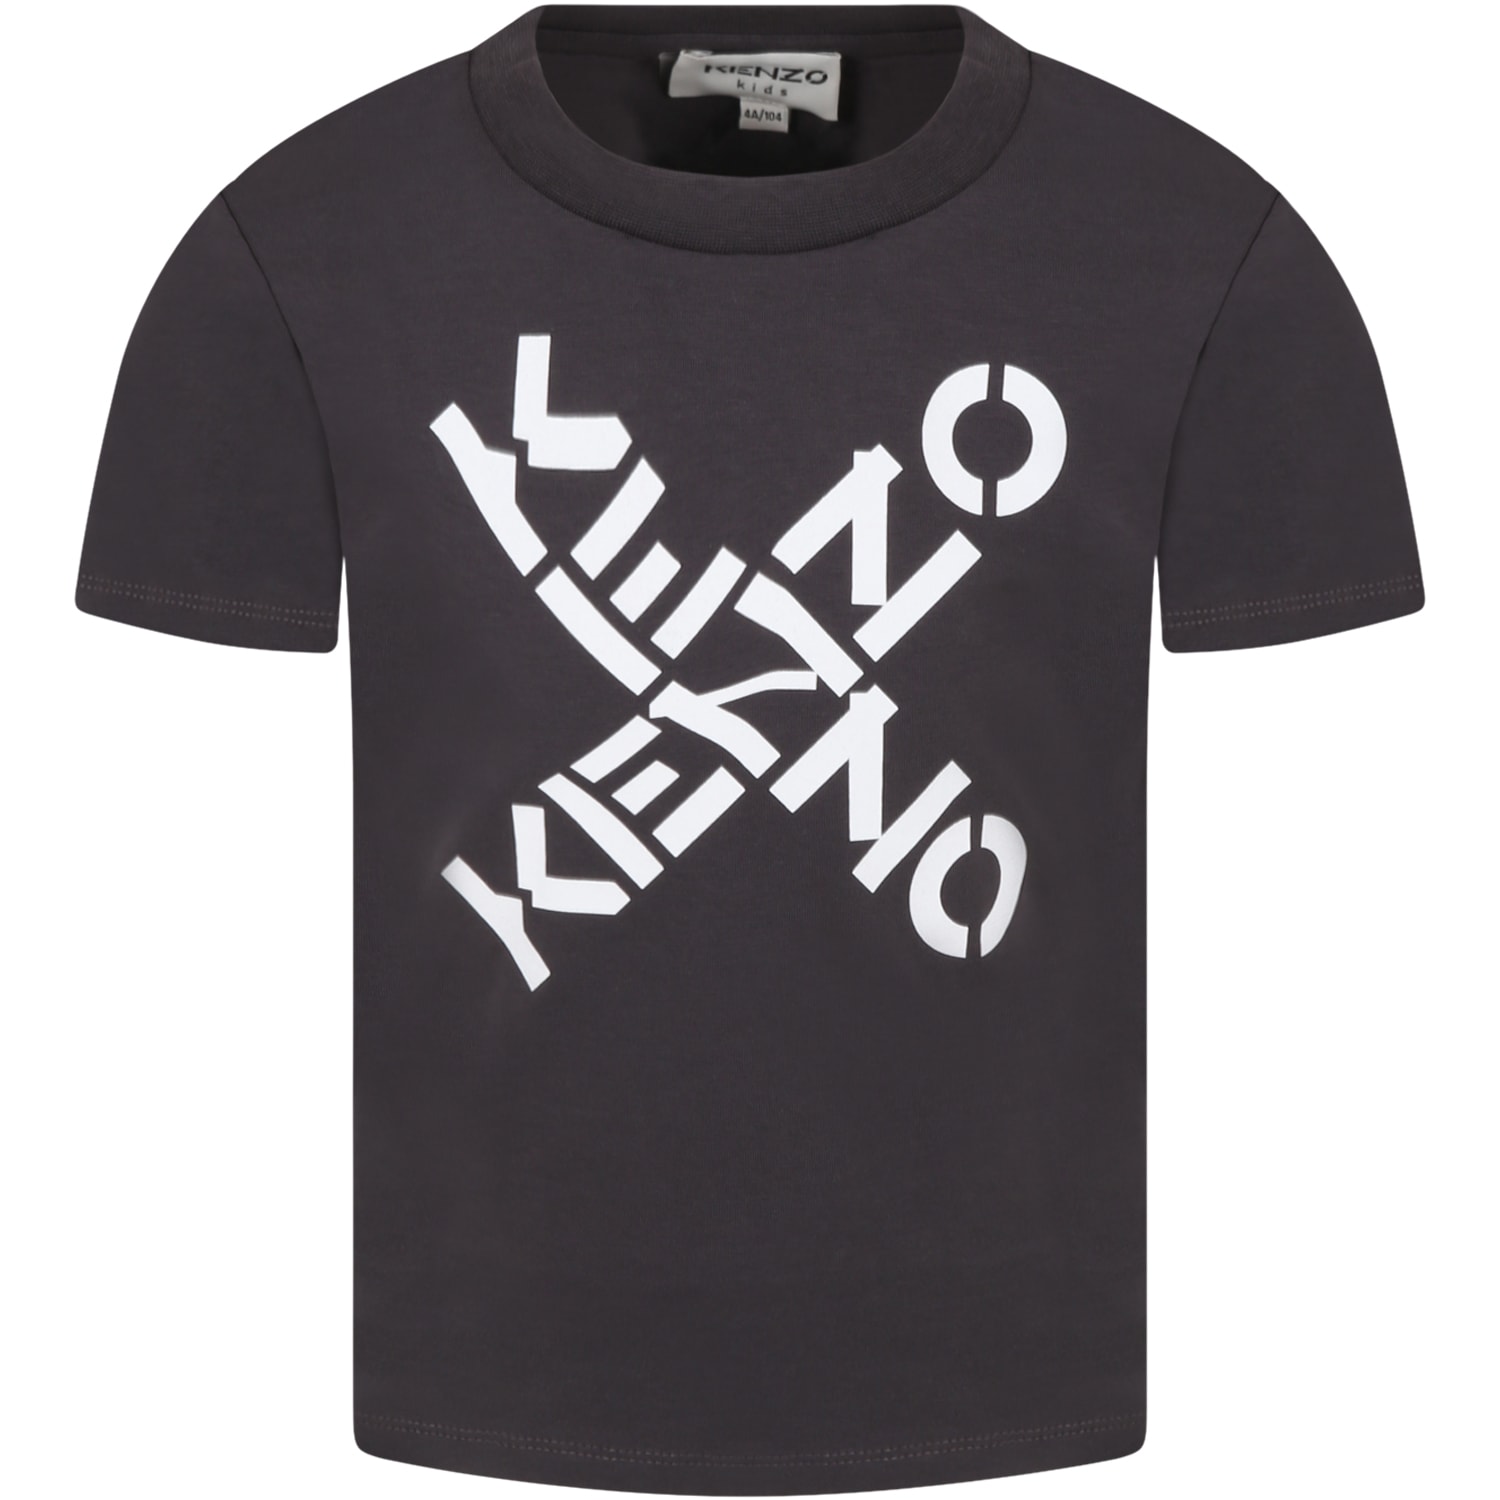 Kenzo Kids Grey T-shirt For Boy With Logos